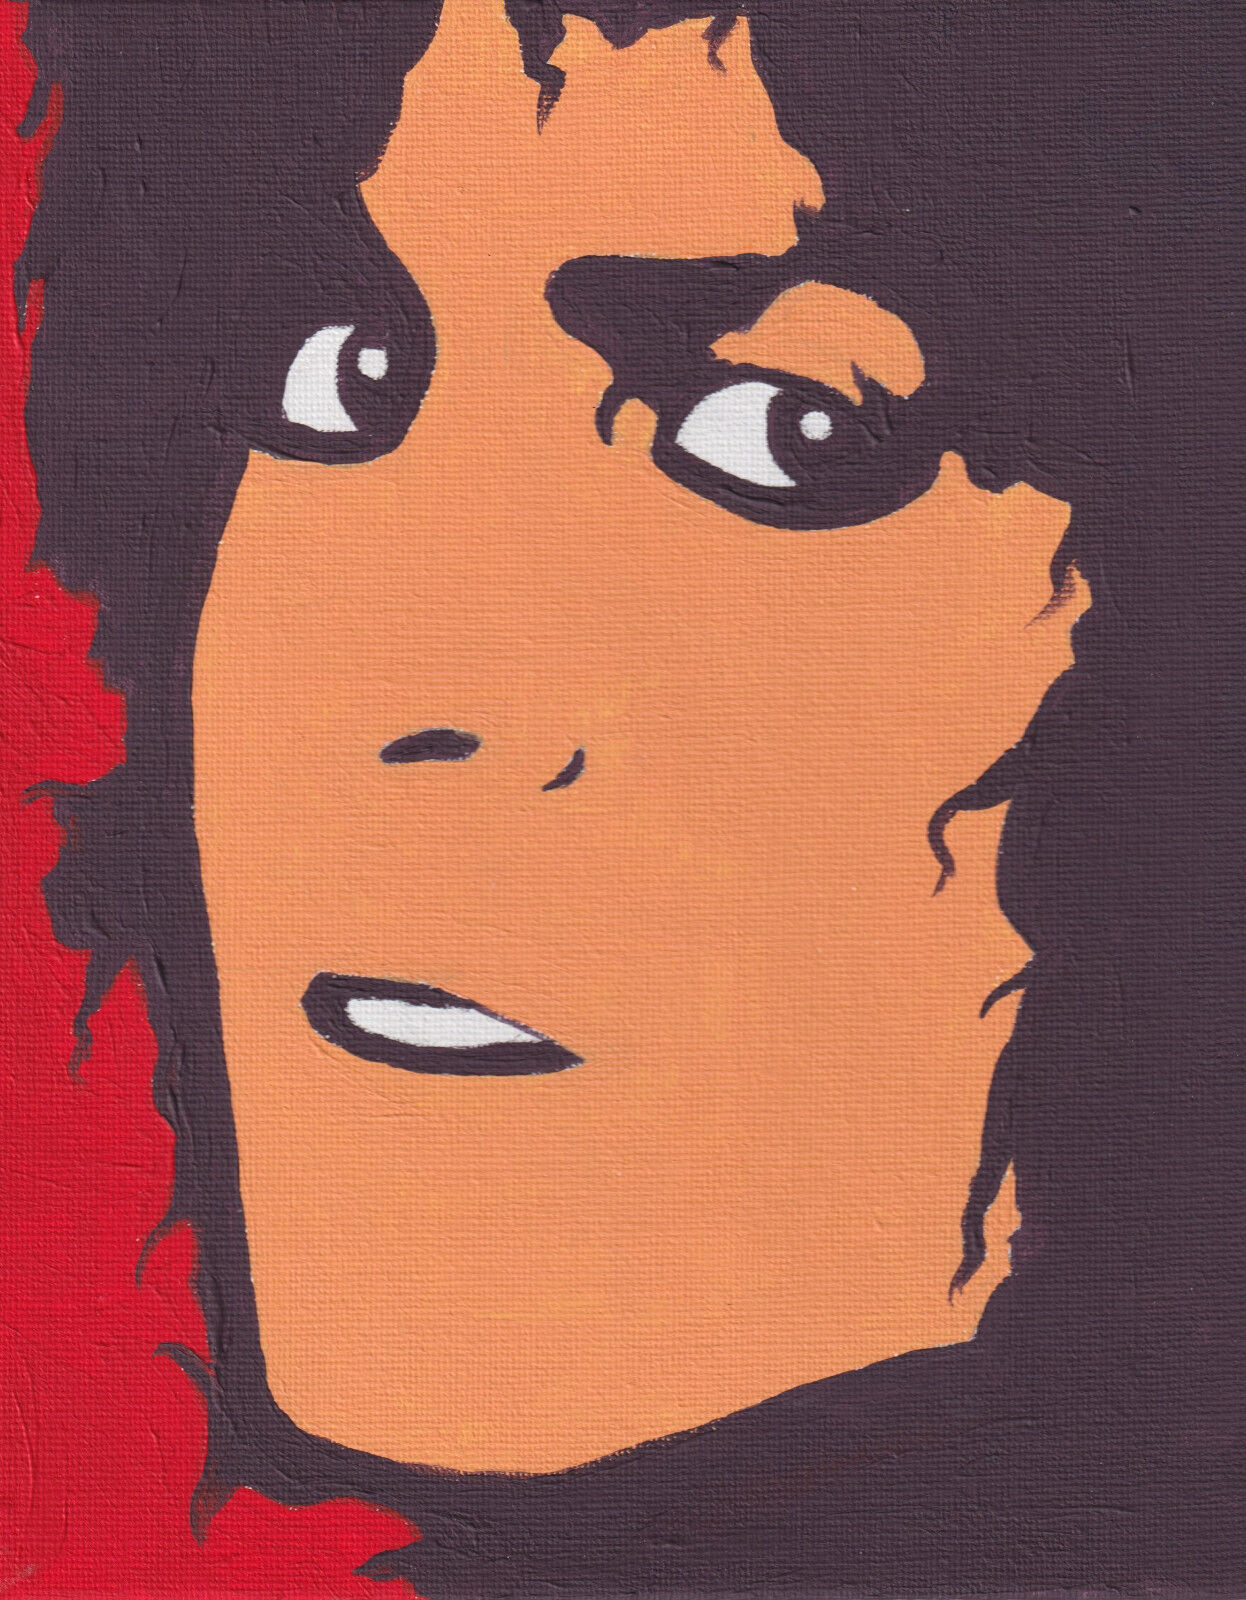 Original New Marc Bolan Pop Art Painting - Vintage Retro 1970s T.Rex